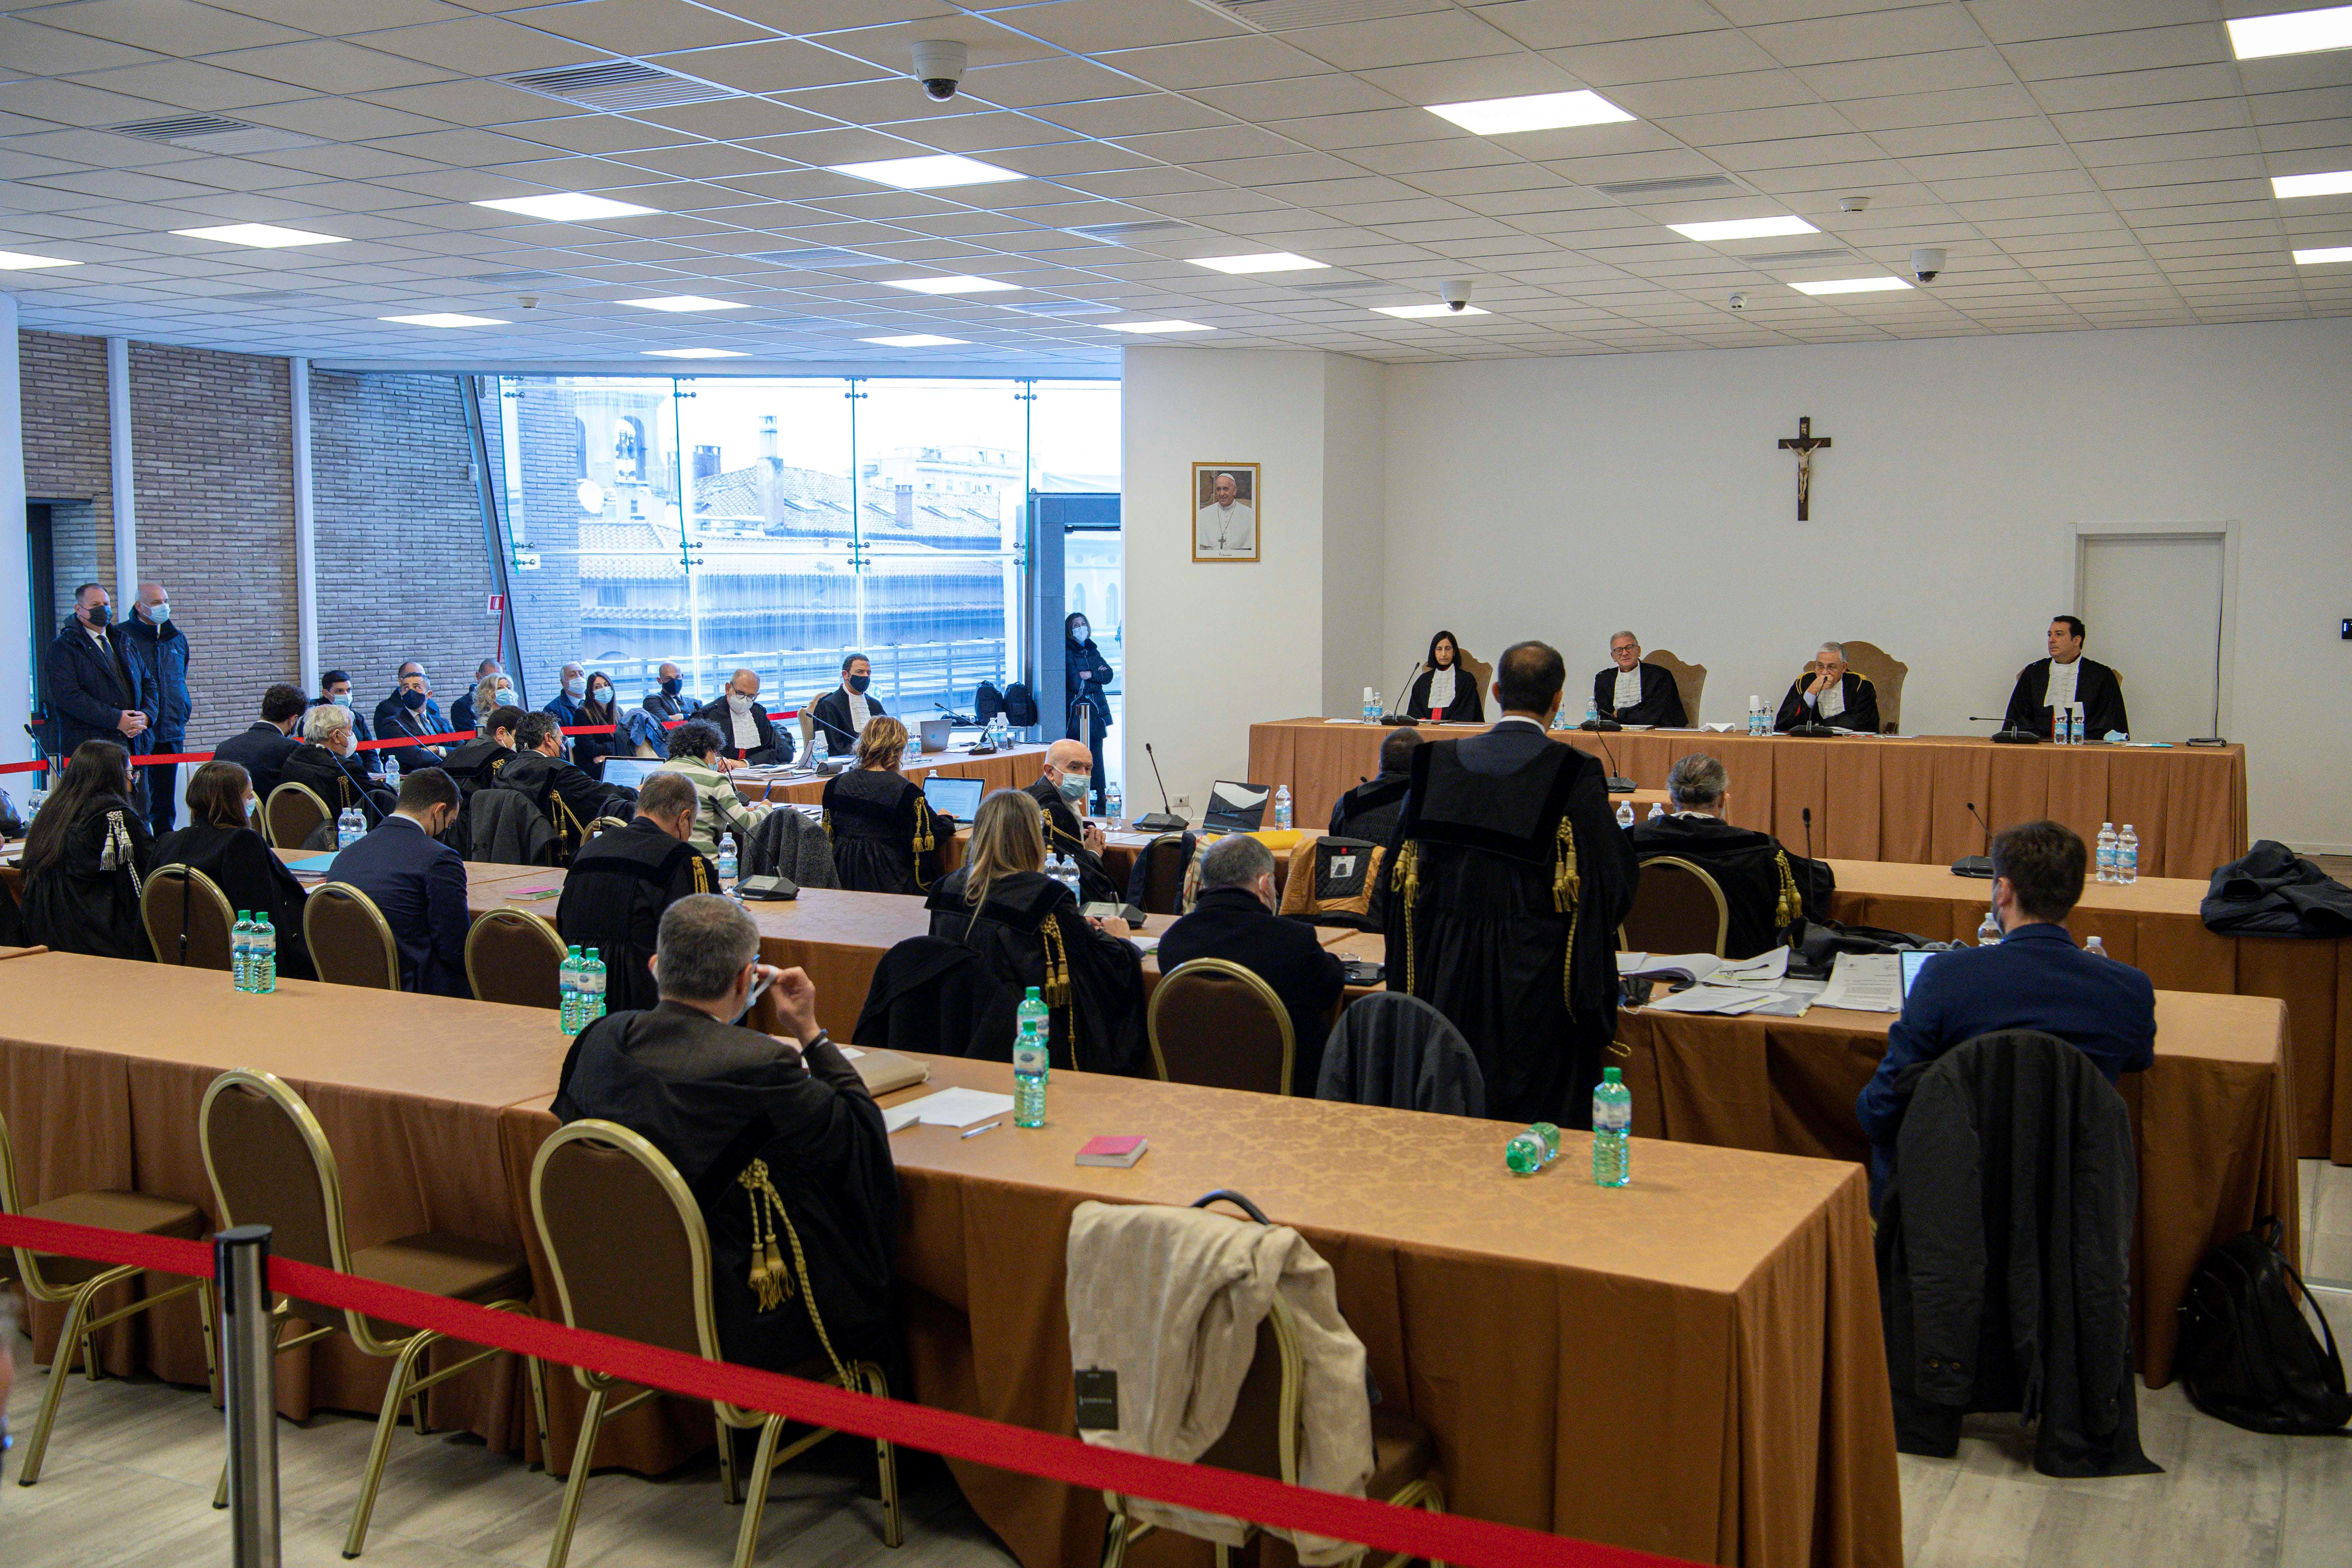 Landmark Vatican corruption trial resumes